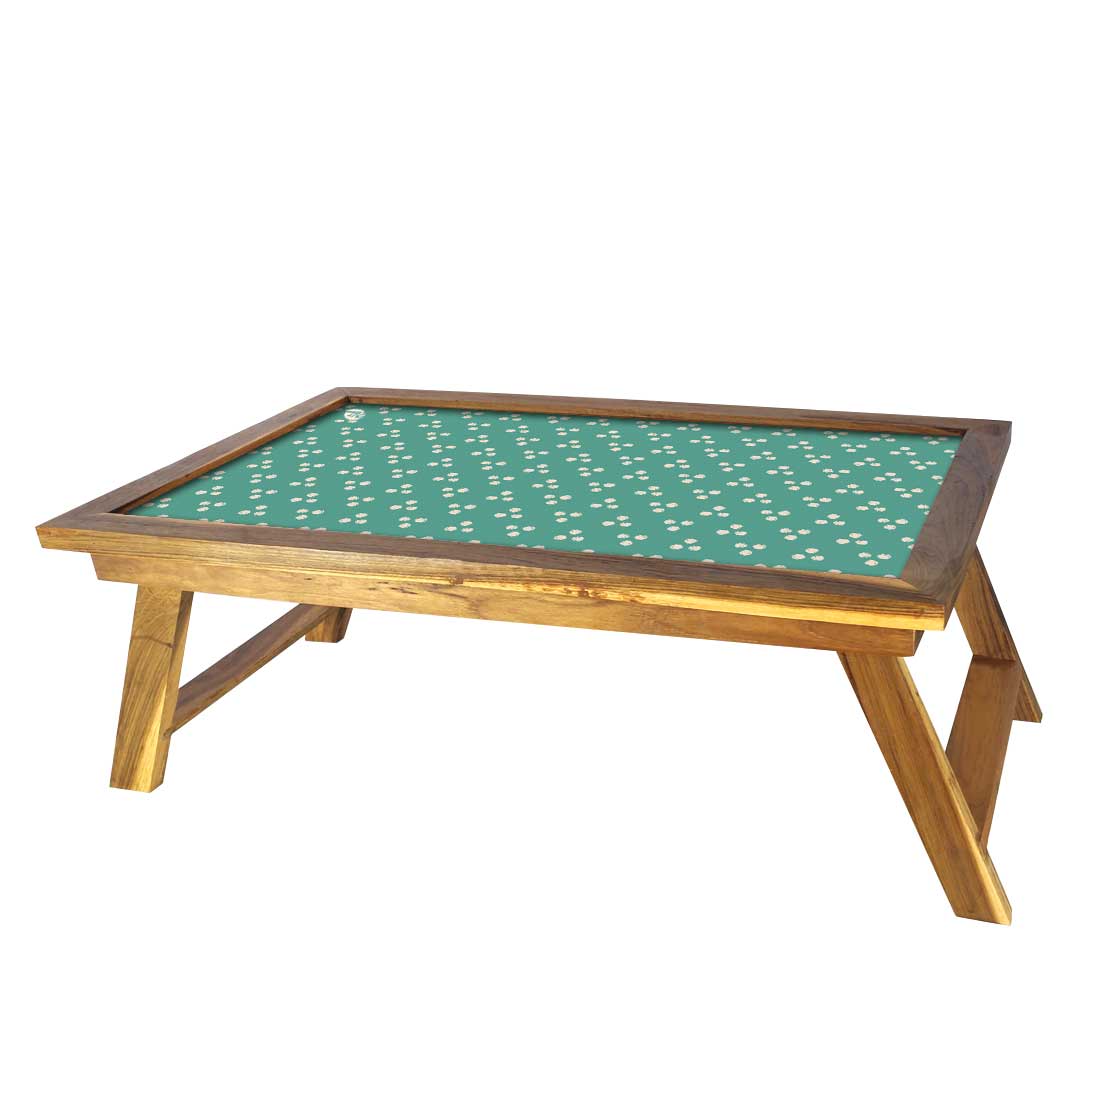 Nutcase Folding Laptop Table For Home Bed Lapdesk Breakfast Table Foldable Teak Wooden Study Desk - Paw - Blue Nutcase